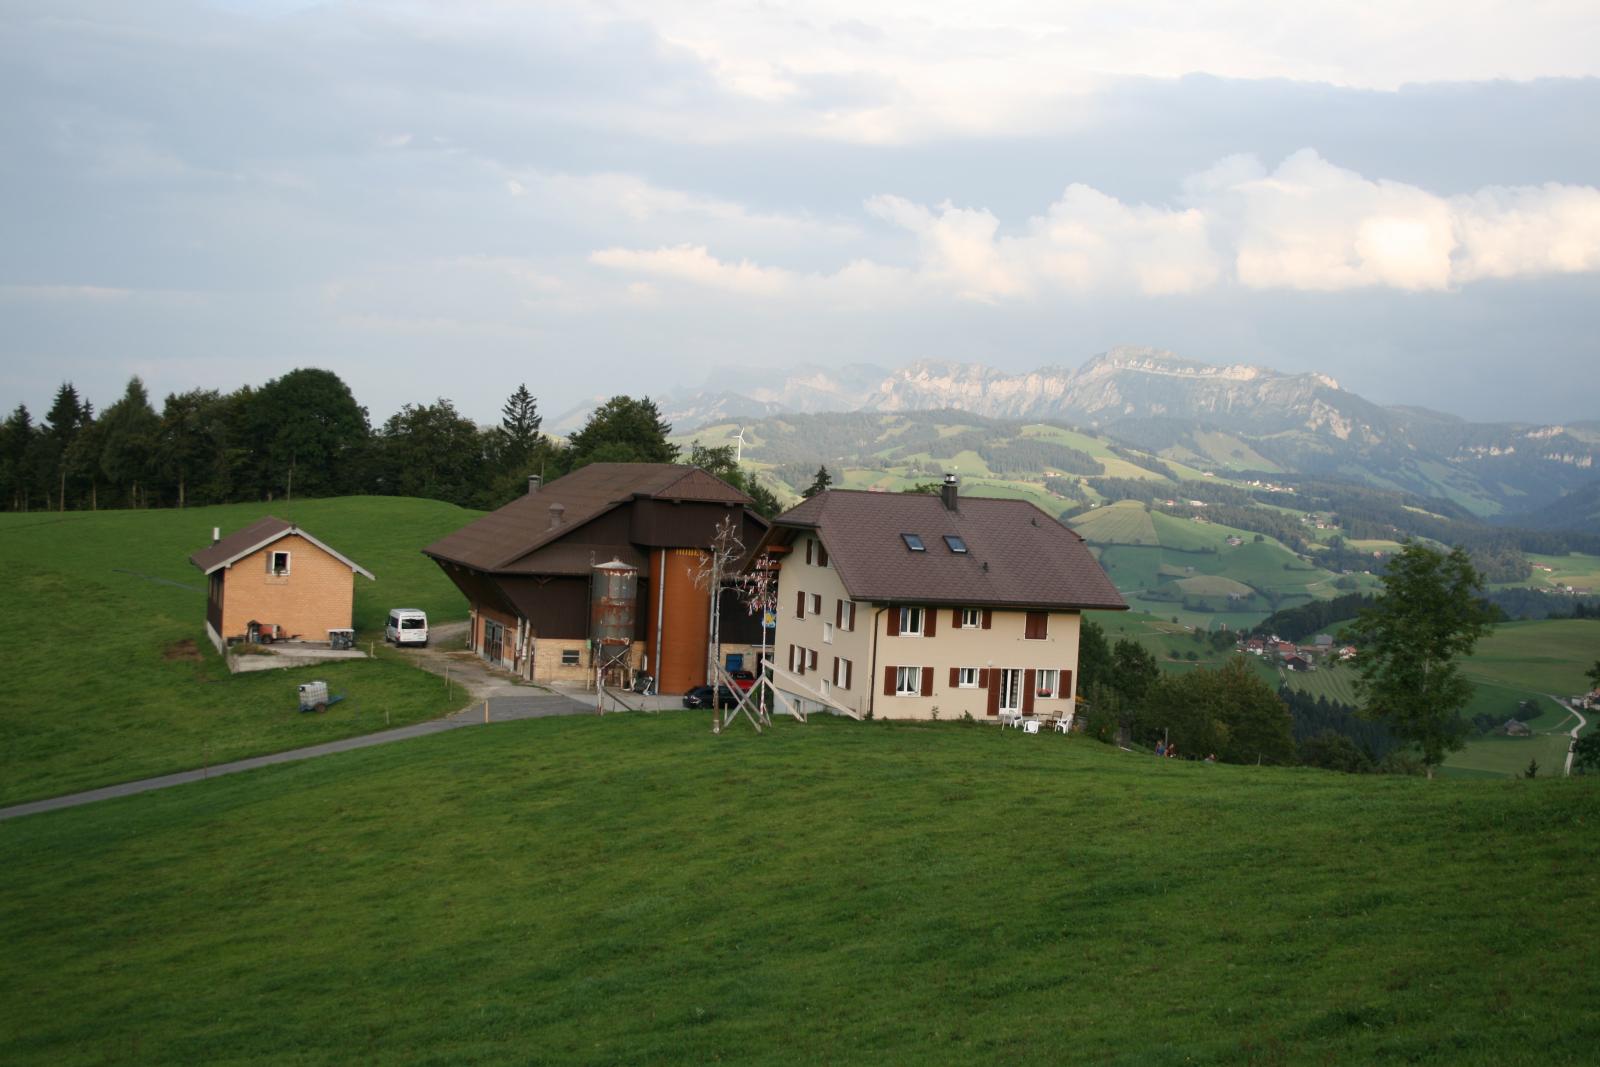 Swiss Farm in the Alps